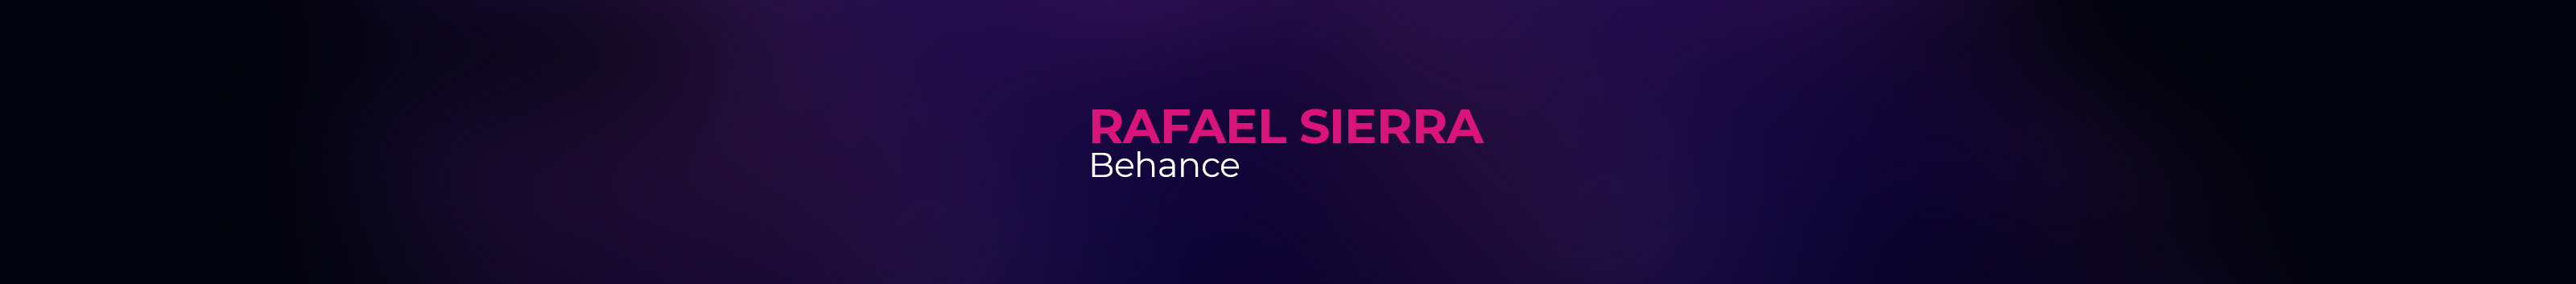 Kilu Rafael Sierra's profile banner